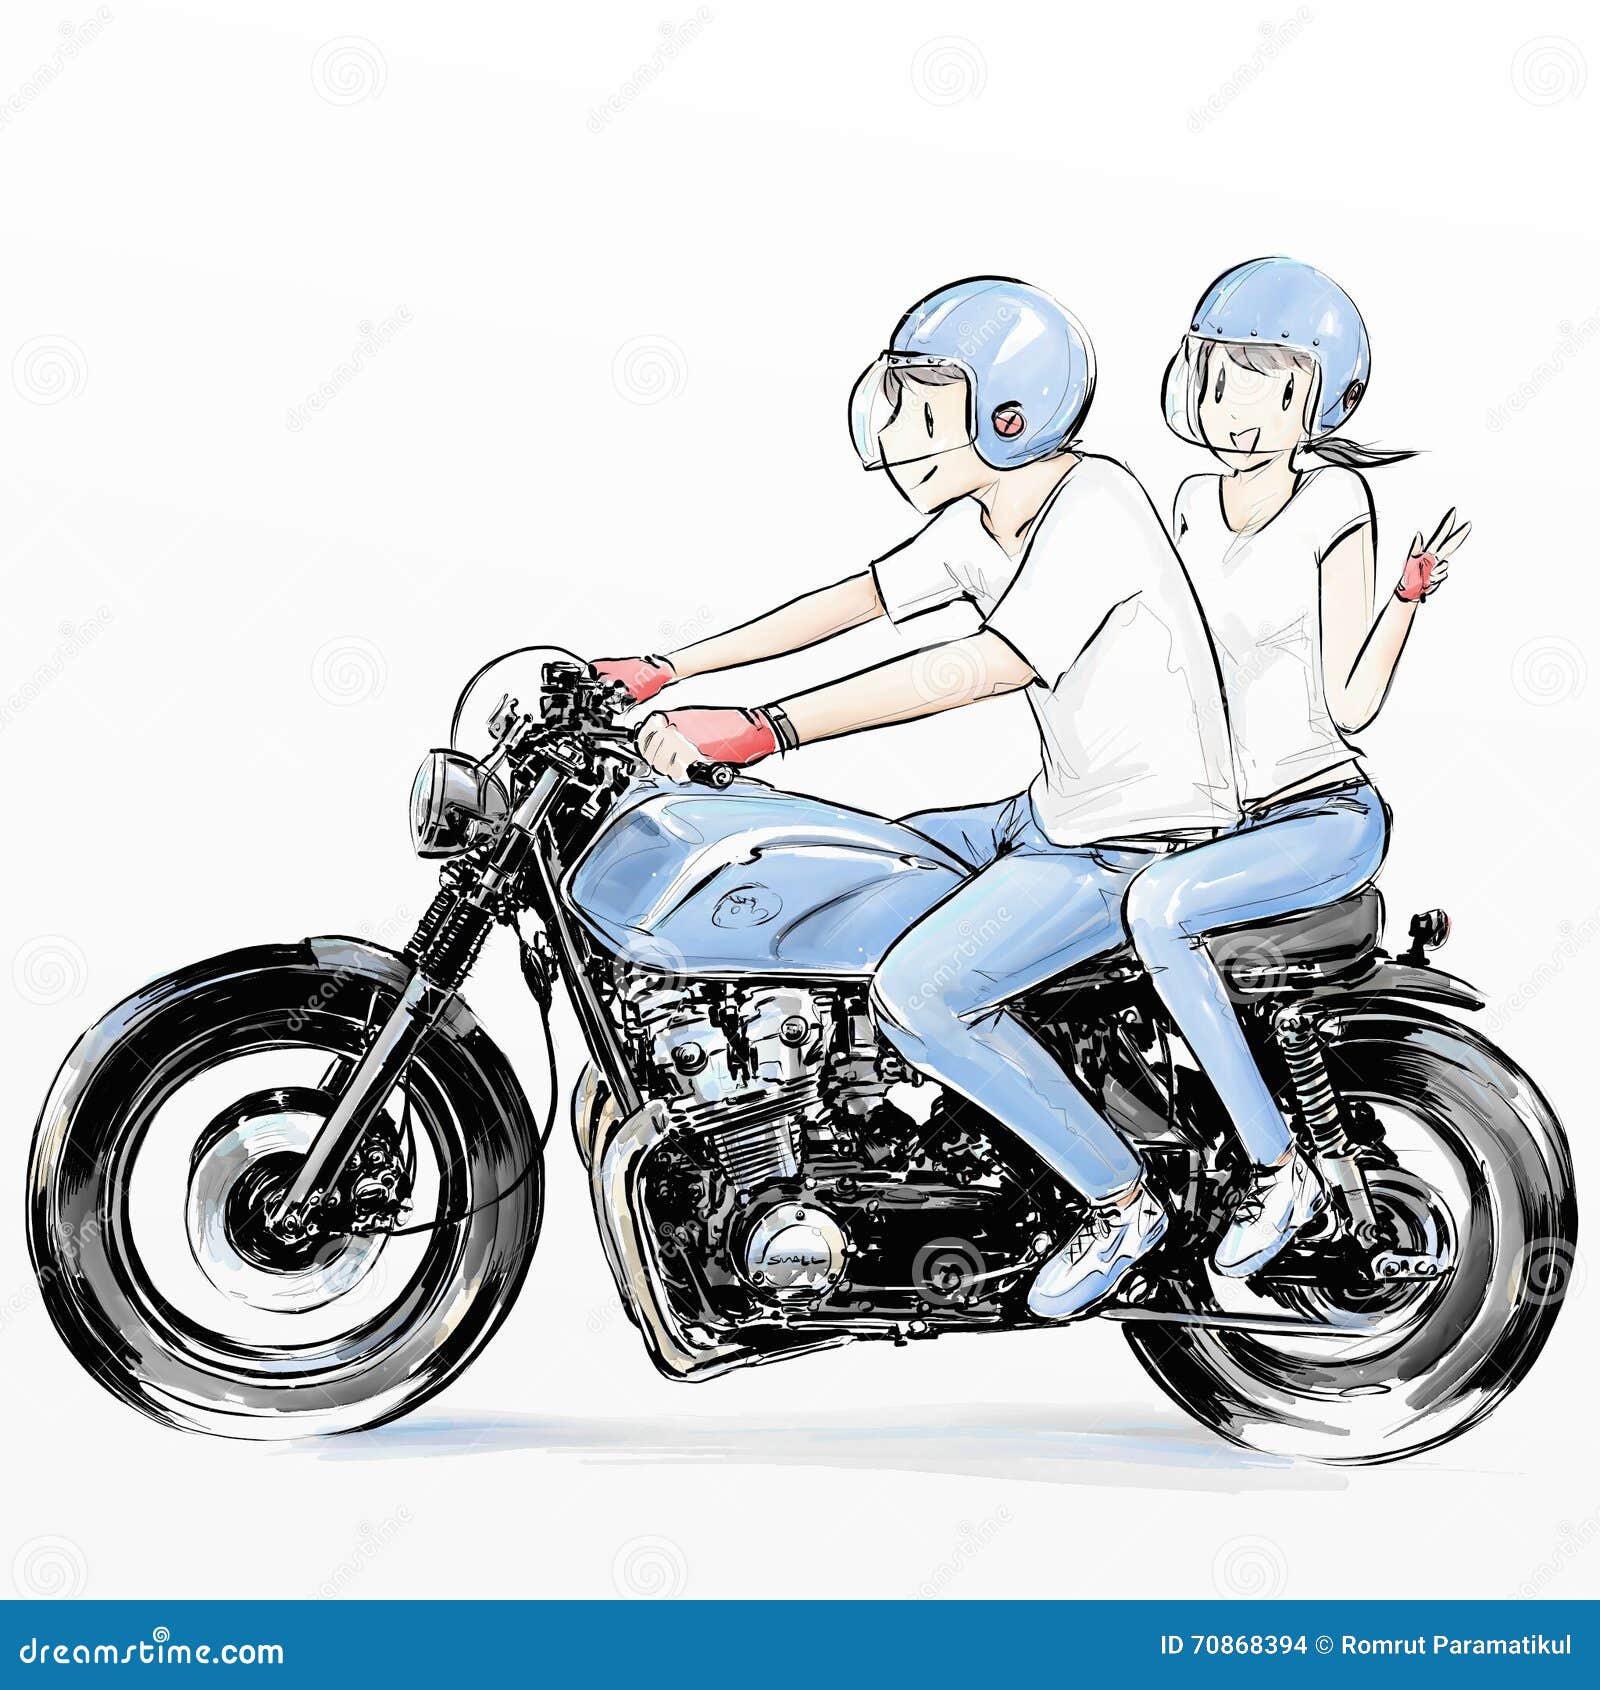 Cute Motorcycle Vector Illustration For Kids Color Book | CartoonDealer ...